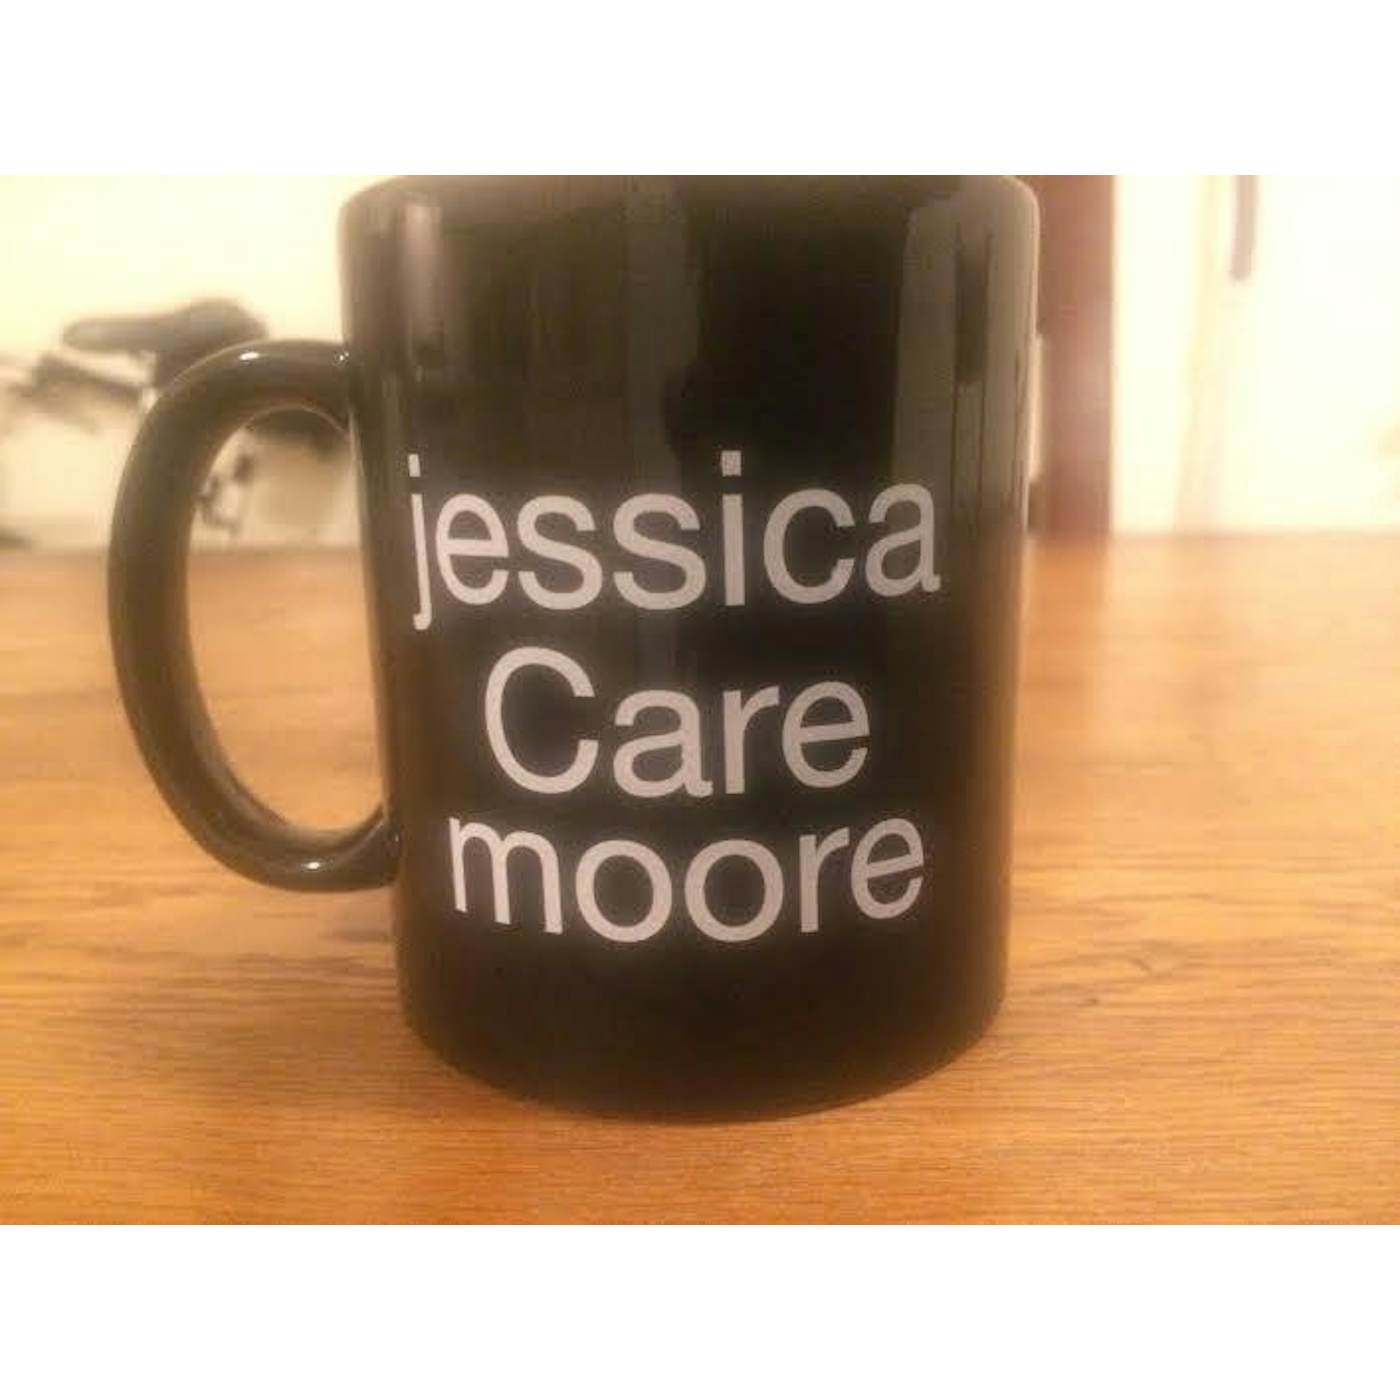 jessica Care moore Black Tea Mug